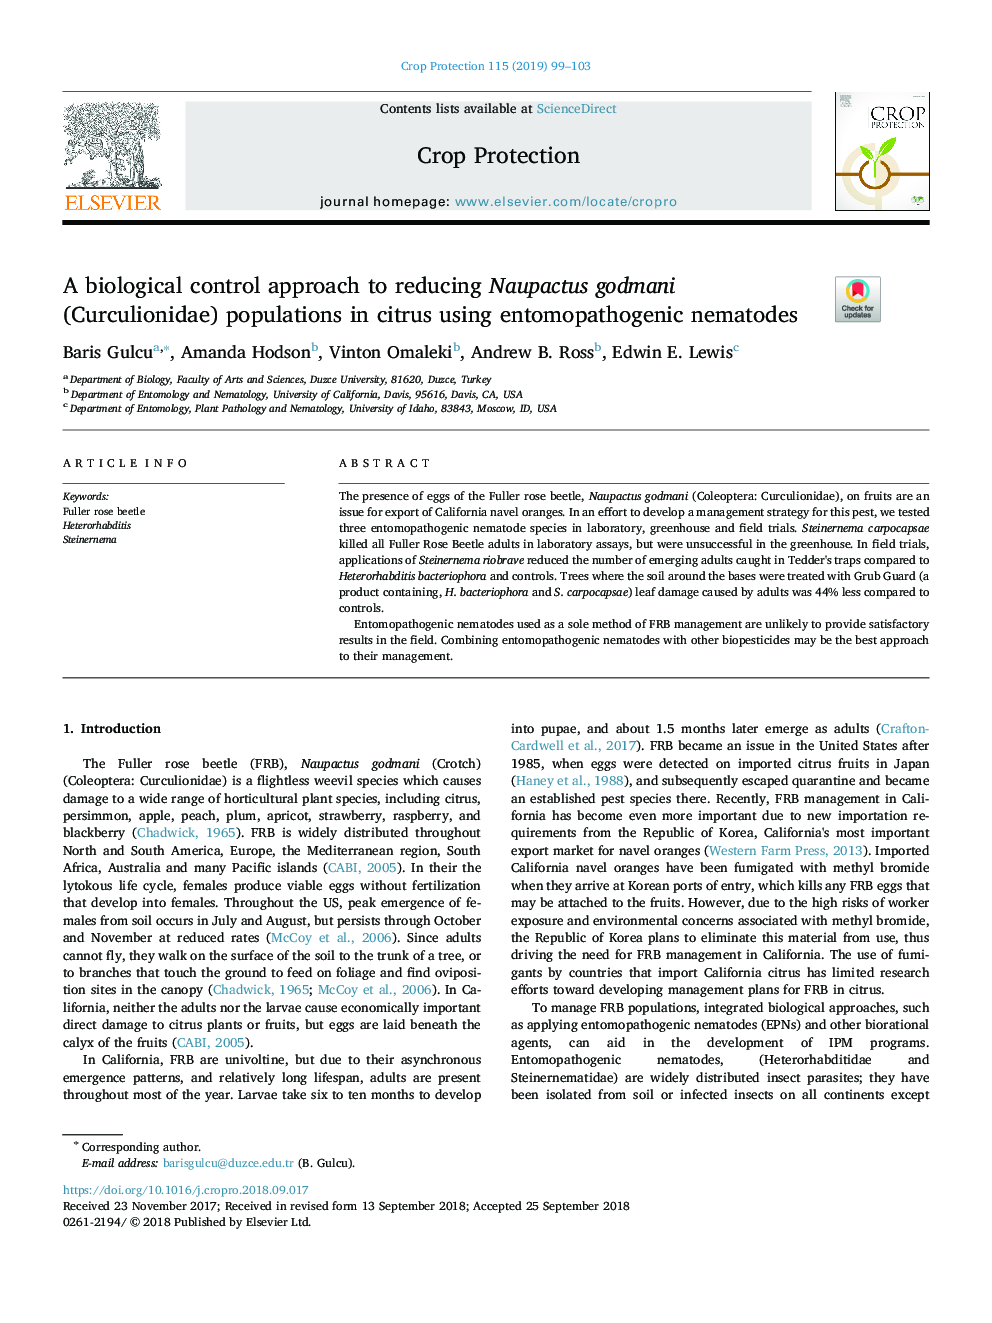 A biological control approach to reducing Naupactus godmani (Curculionidae) populations in citrus using entomopathogenic nematodes